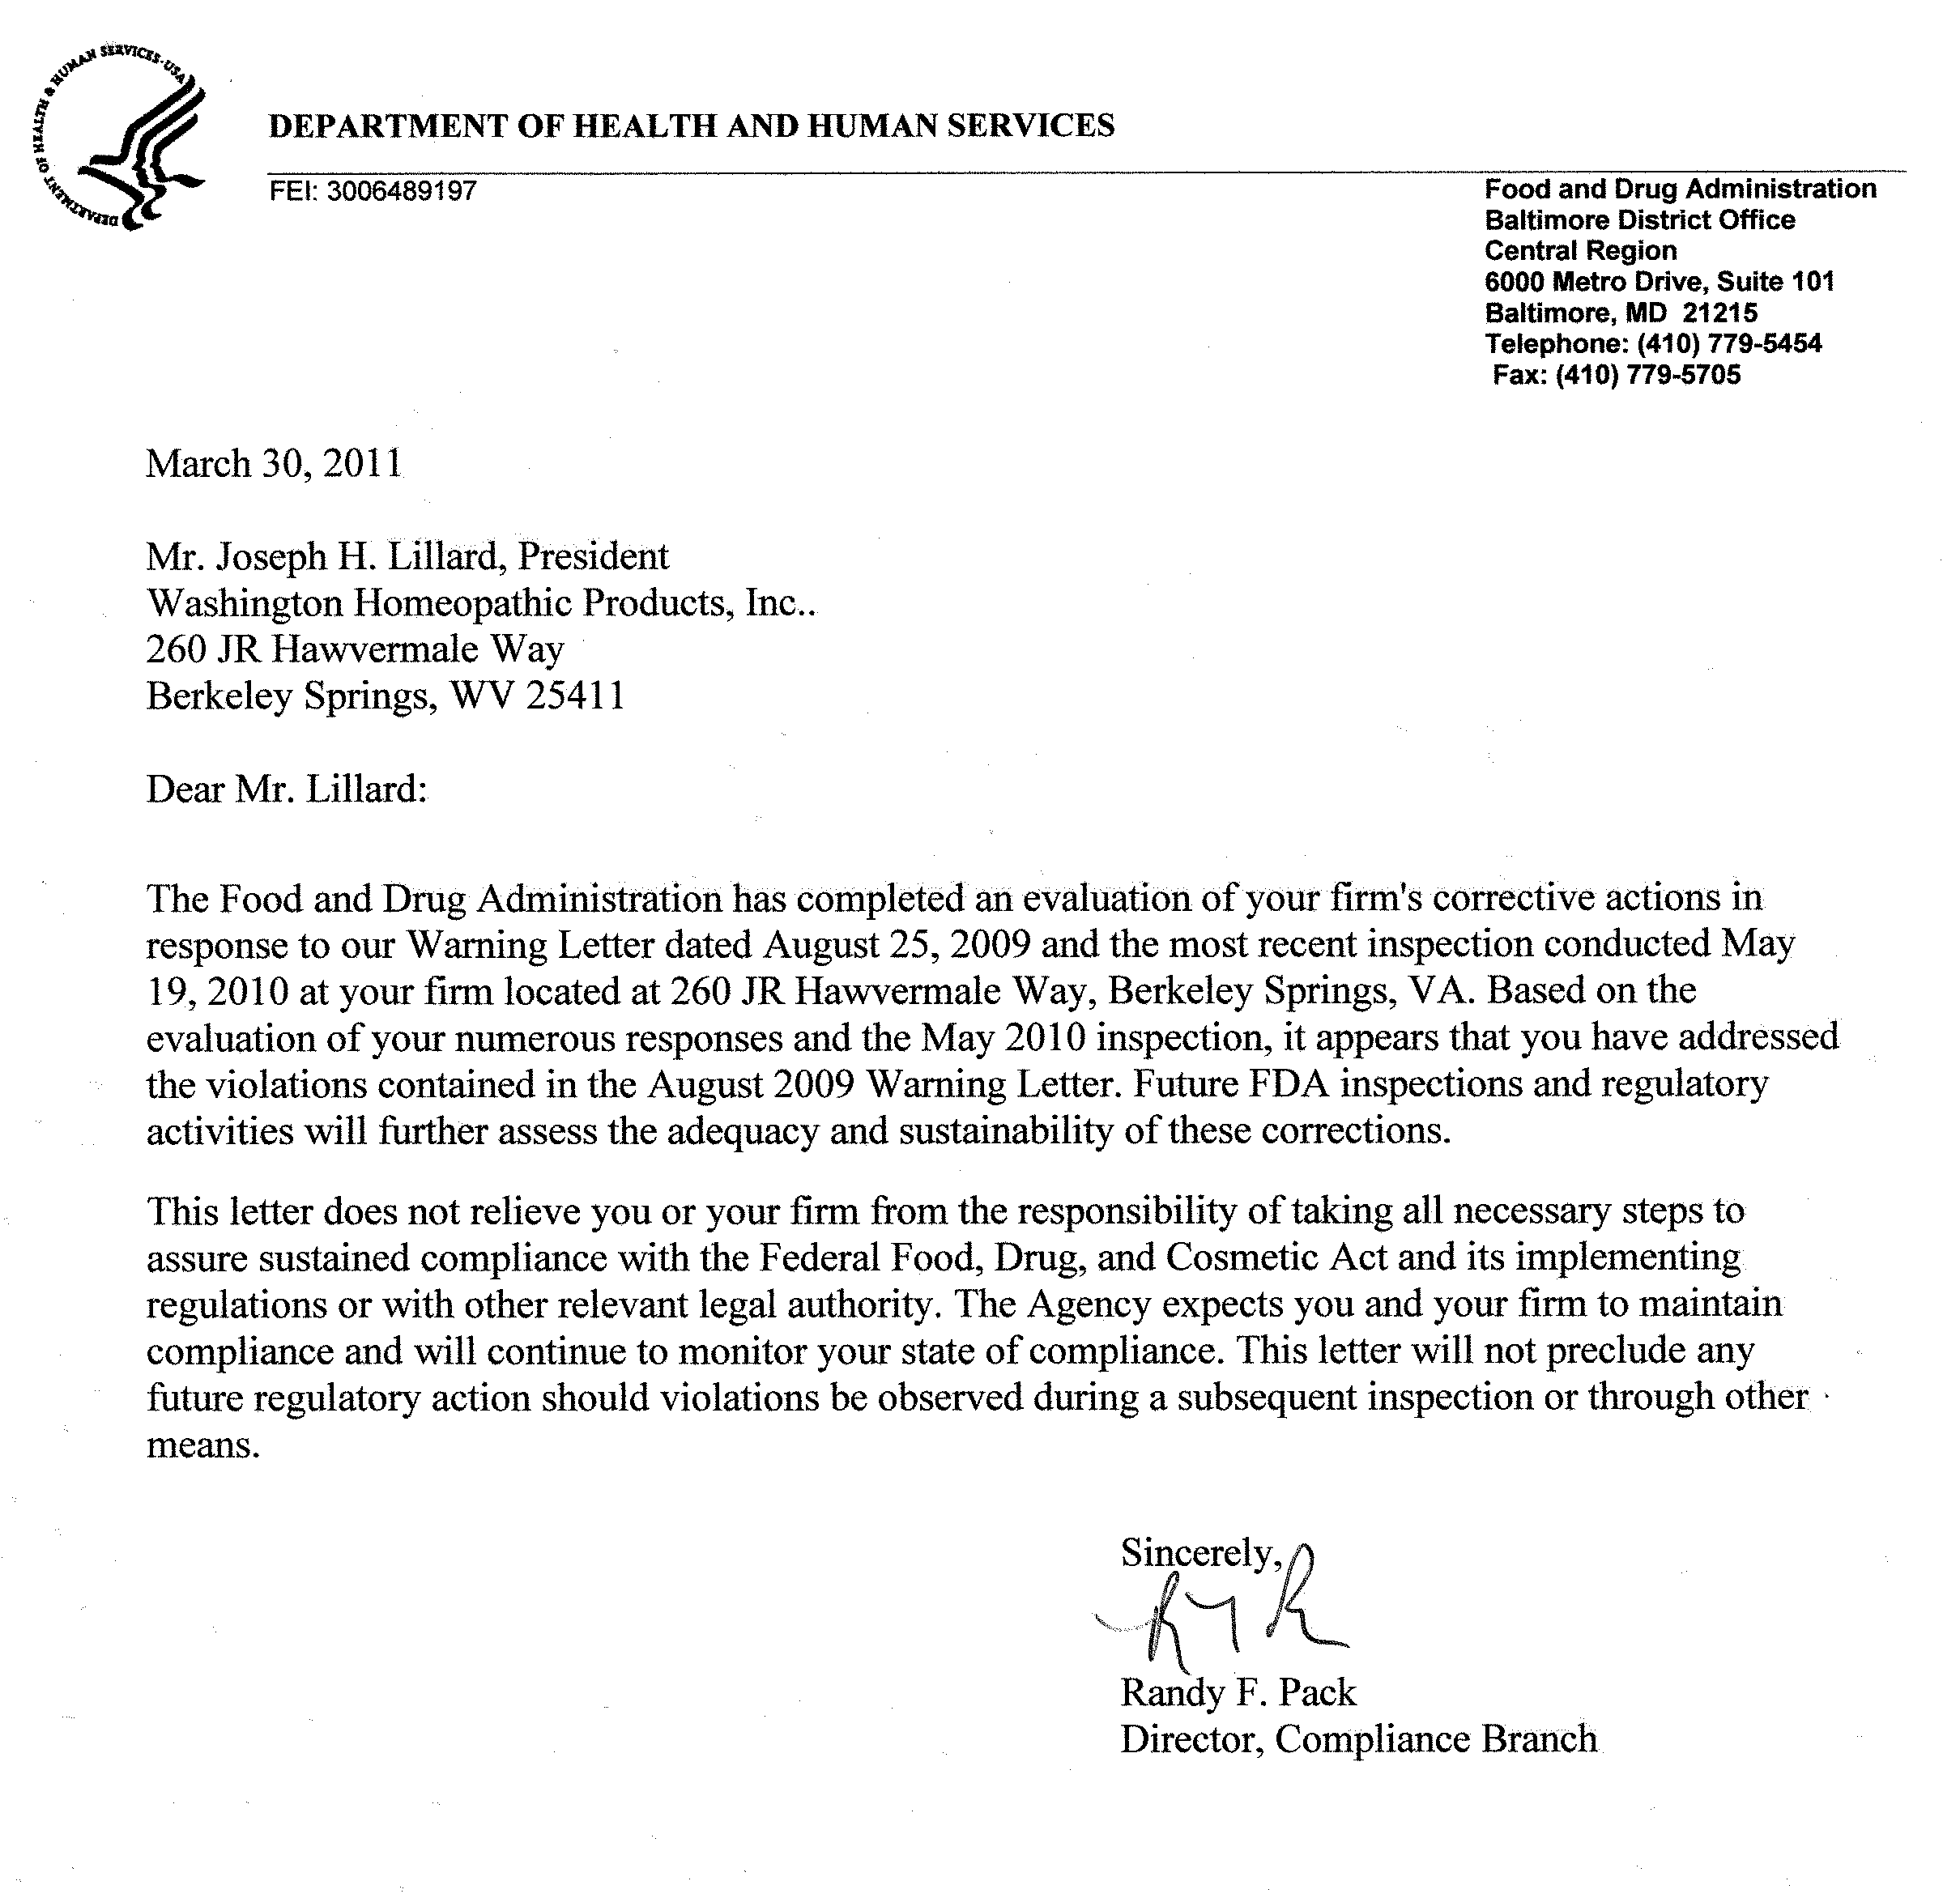 Mock Response To A FDA Warning Letter - Fda Promotional 